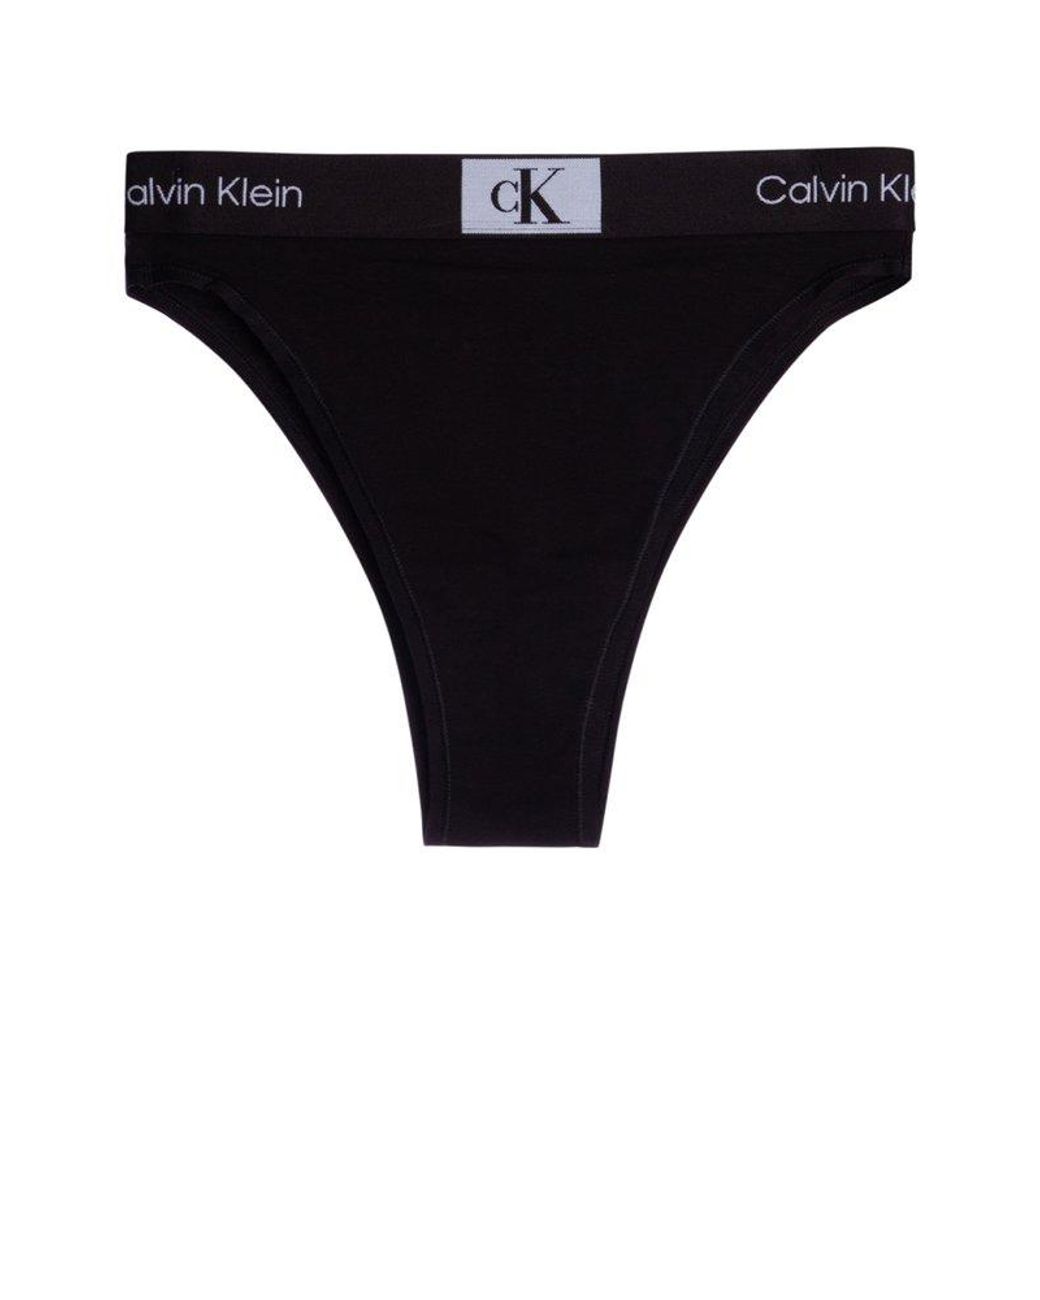 Calvin Klein High Waisted Brazilian Briefs in Black